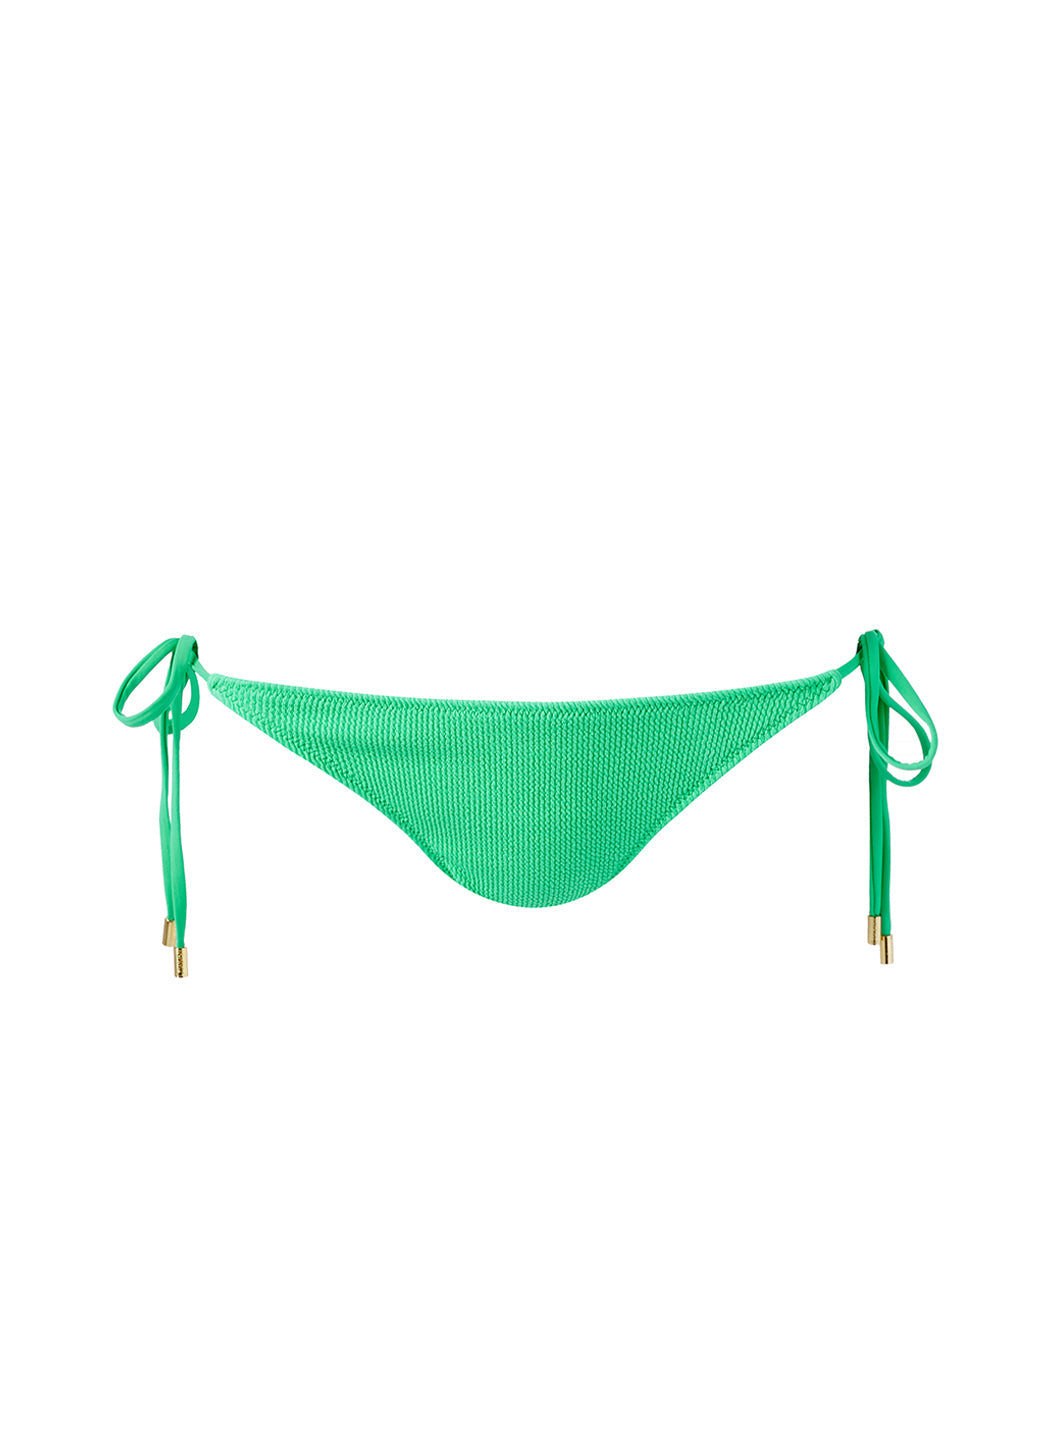 melbourne green ridges bikini bottom cutouts 2024